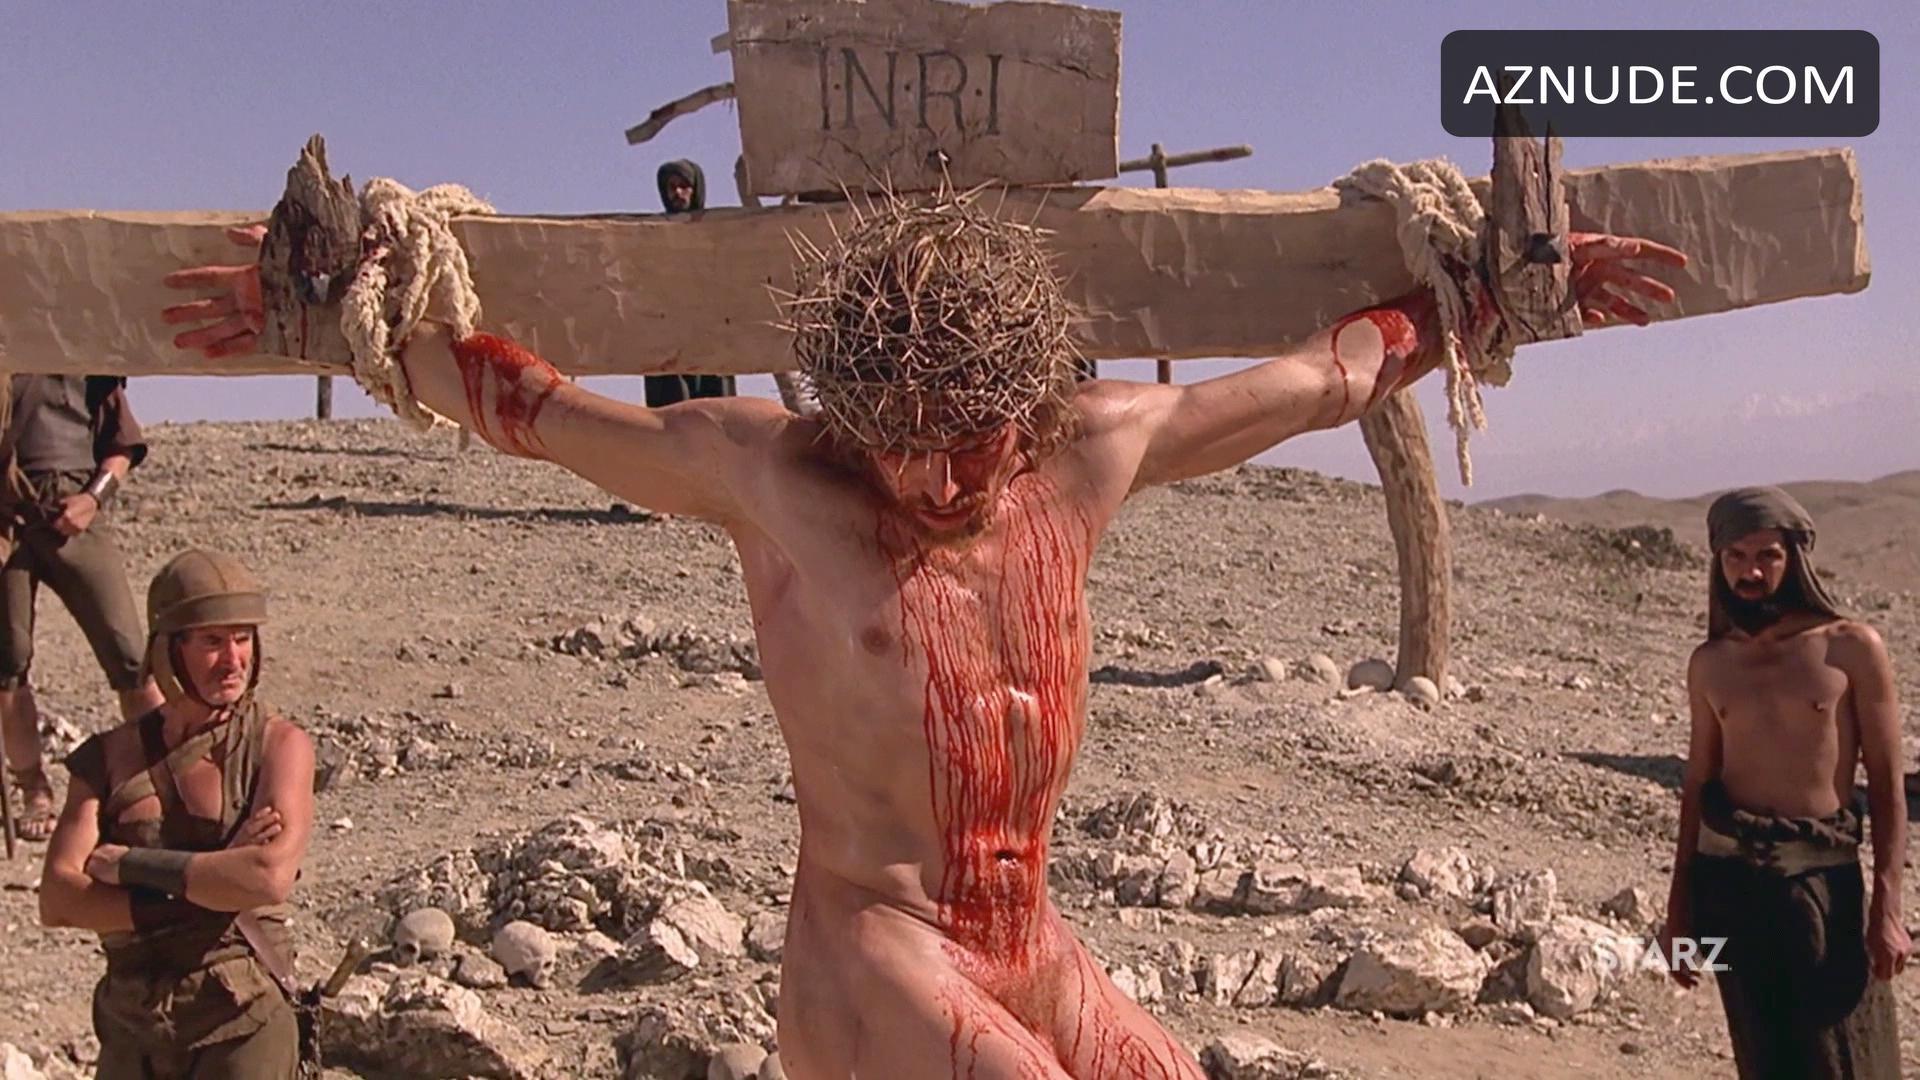 The Last Temptation Of Christ Nude Scenes Aznude Men Free Download